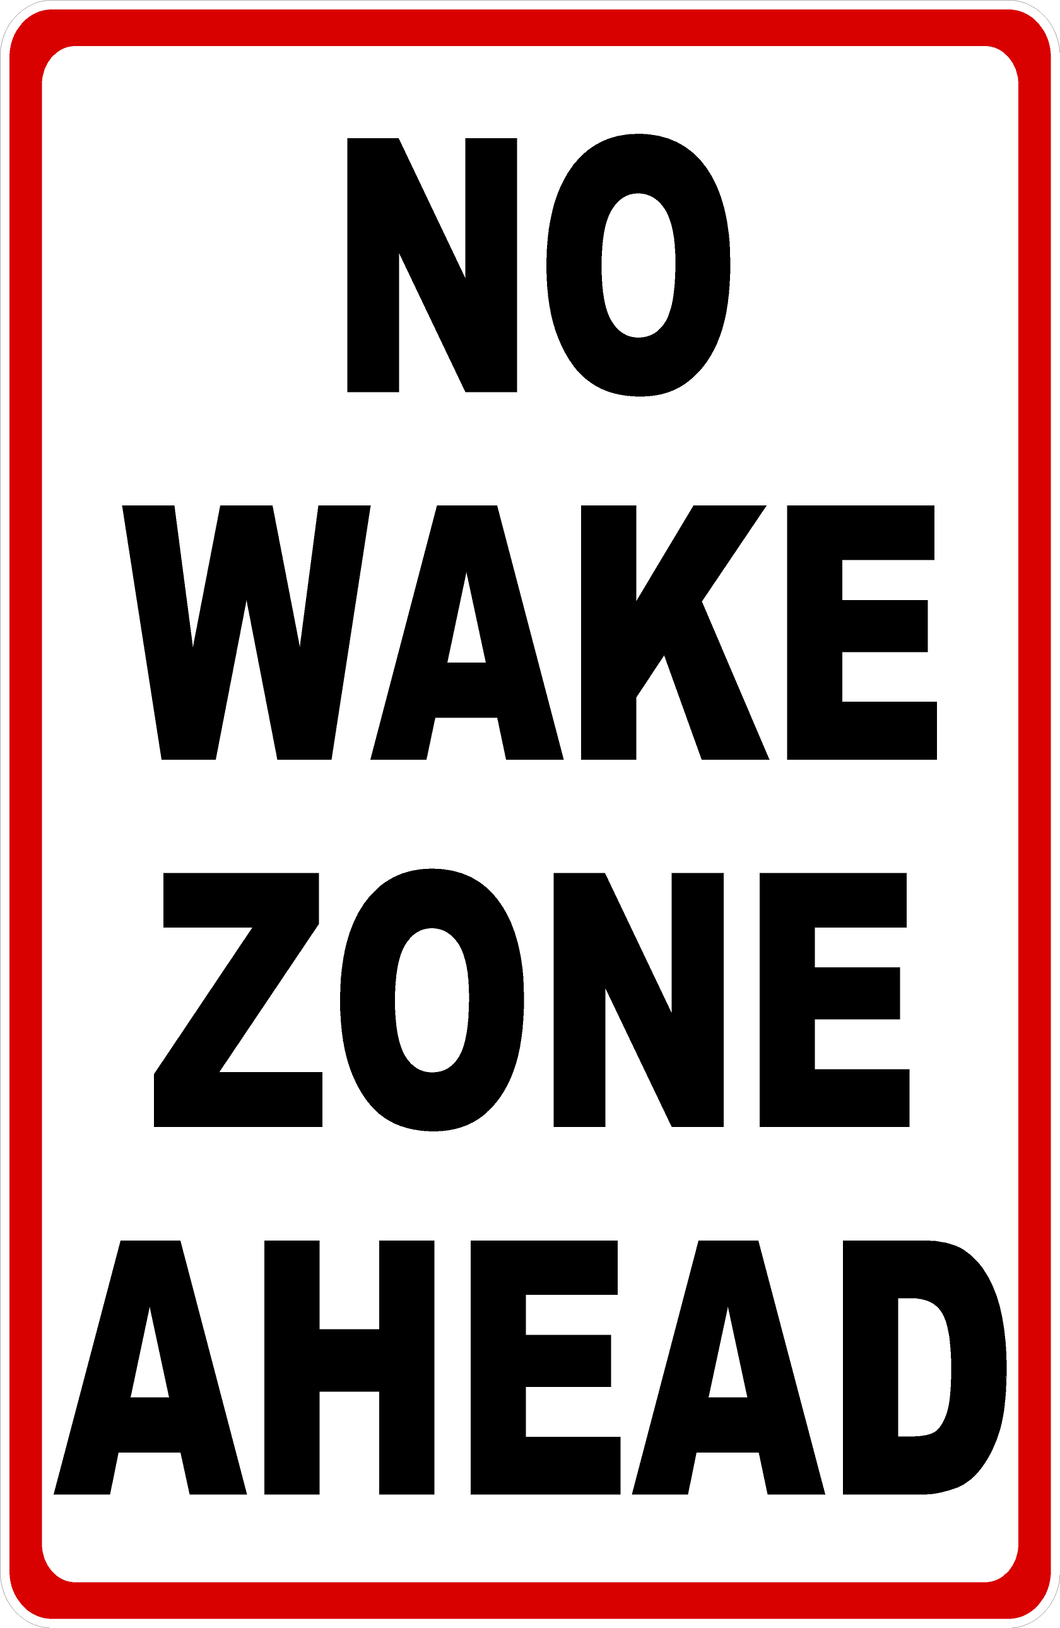 No Wake Zone Ahead Sign